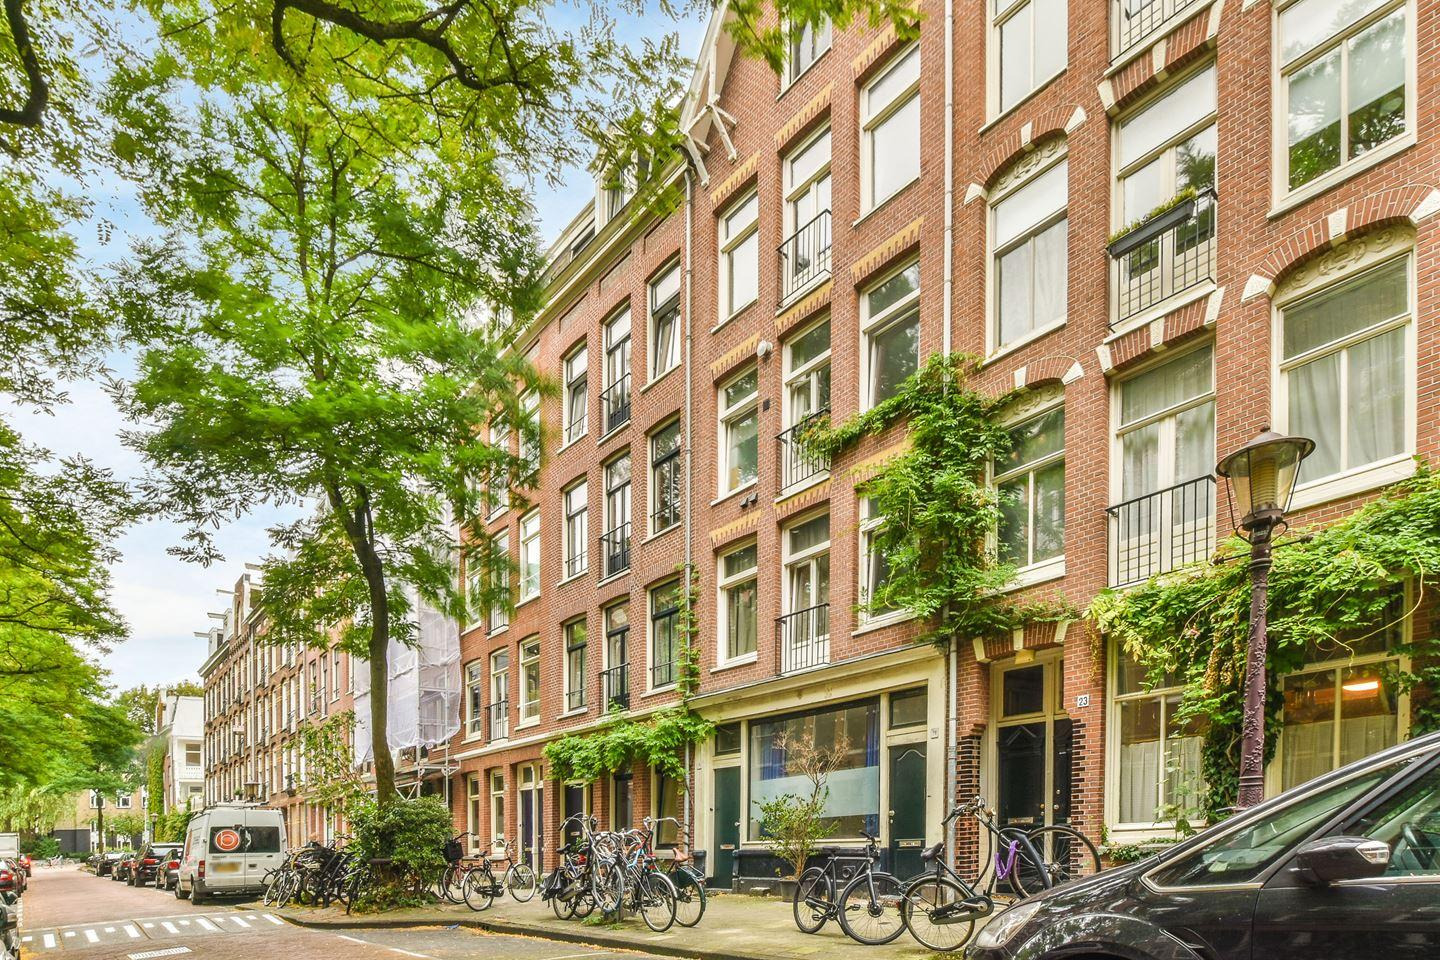 Kamer - Wilhelminastraat - 1054VT - Amsterdam